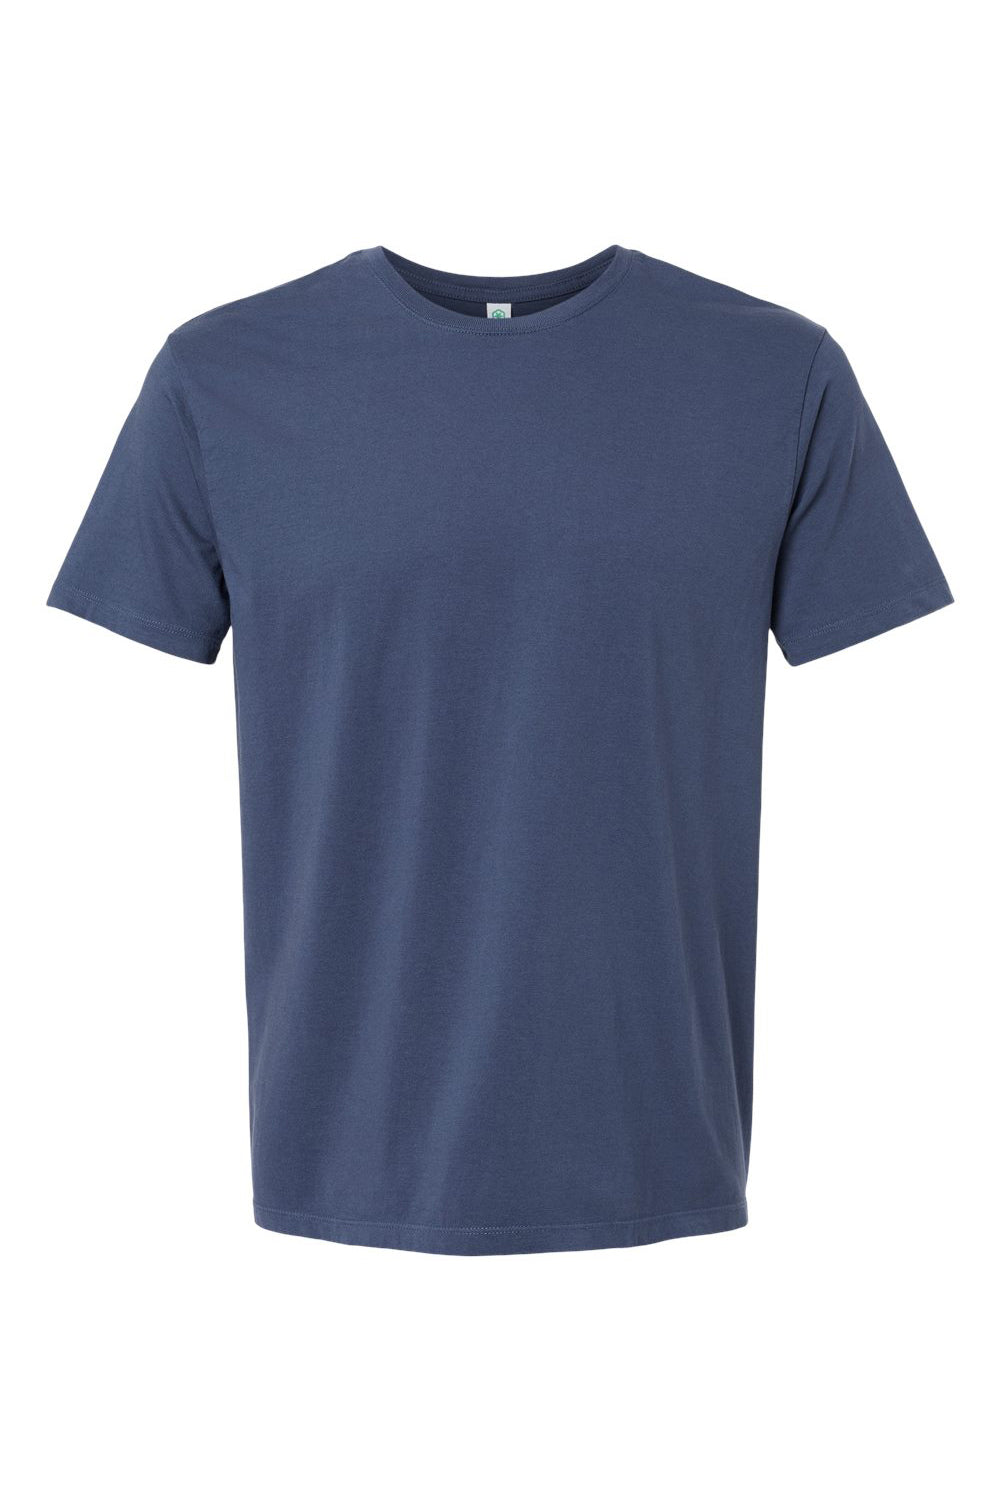 SoftShirts 400 Mens Organic Short Sleeve Crewneck T-Shirt Navy Blue Flat Front